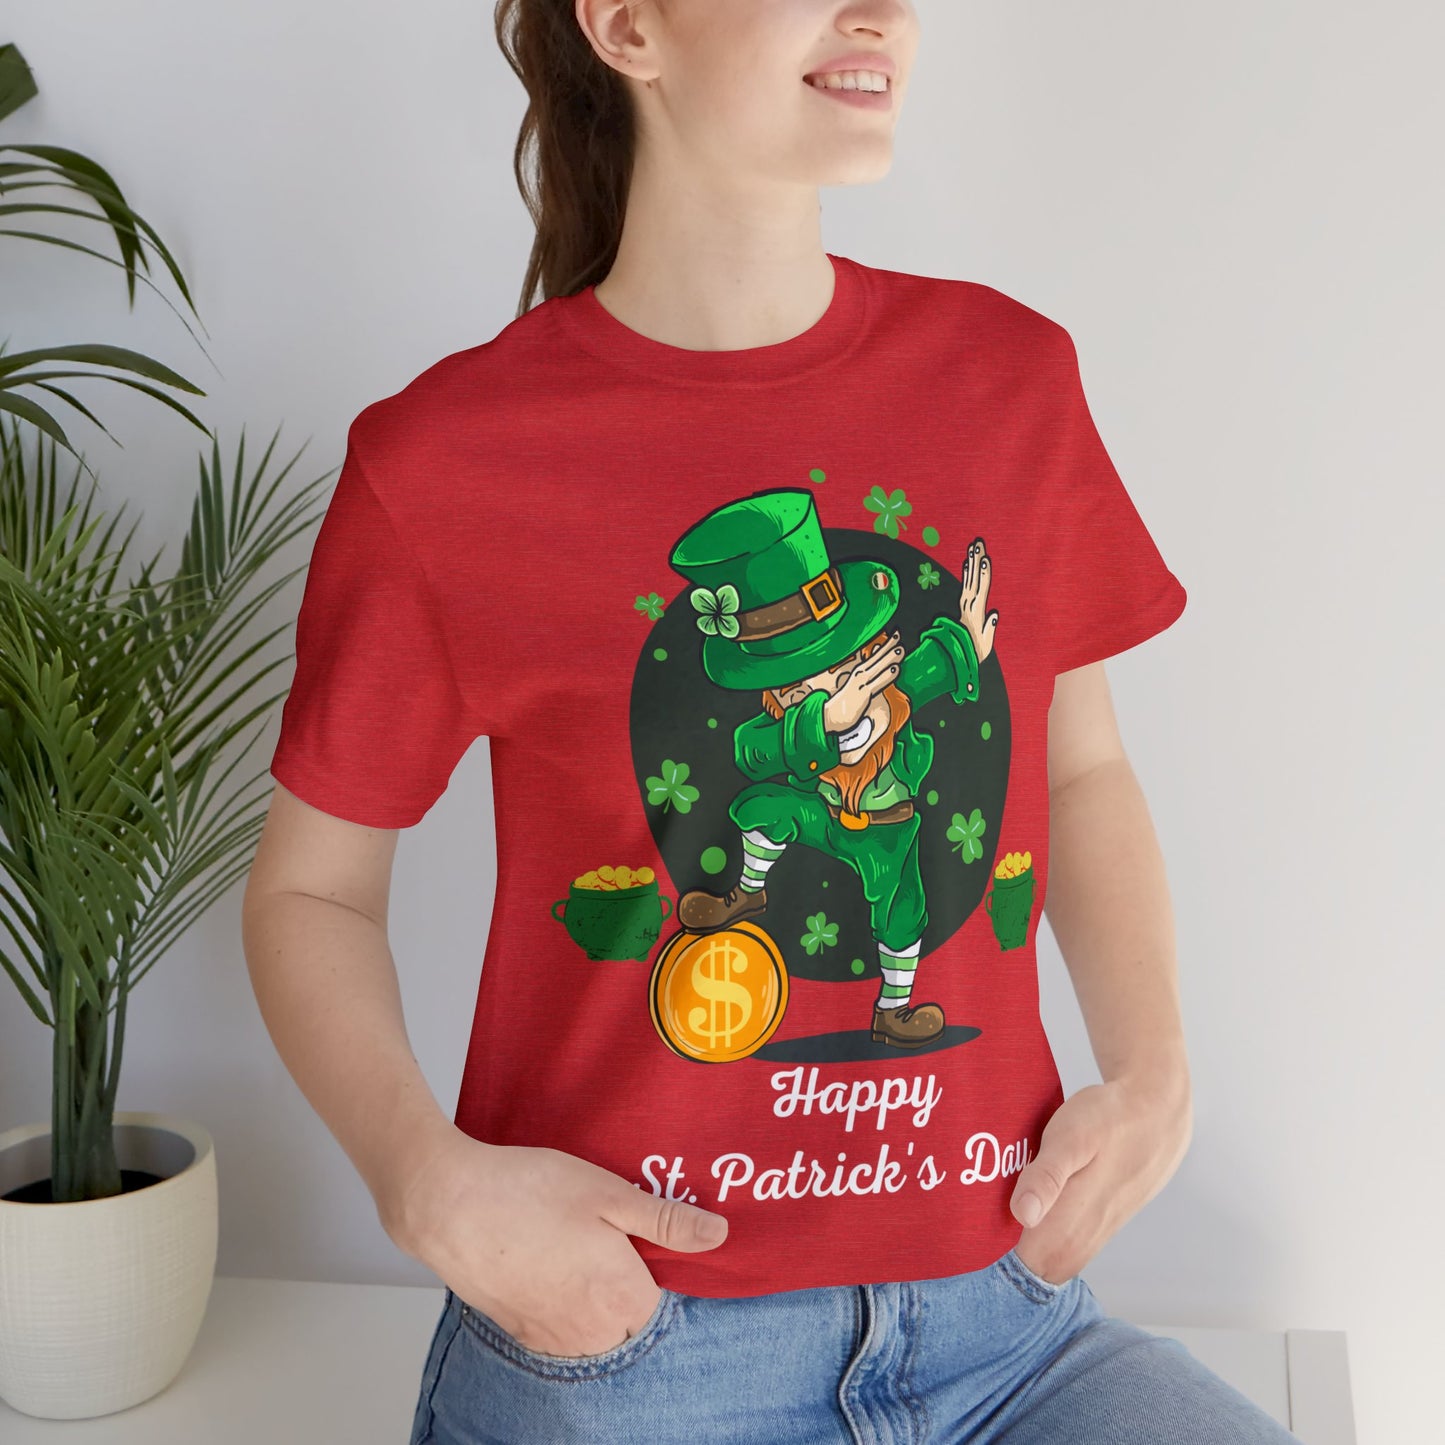 Happy St Patrick's Day shirt